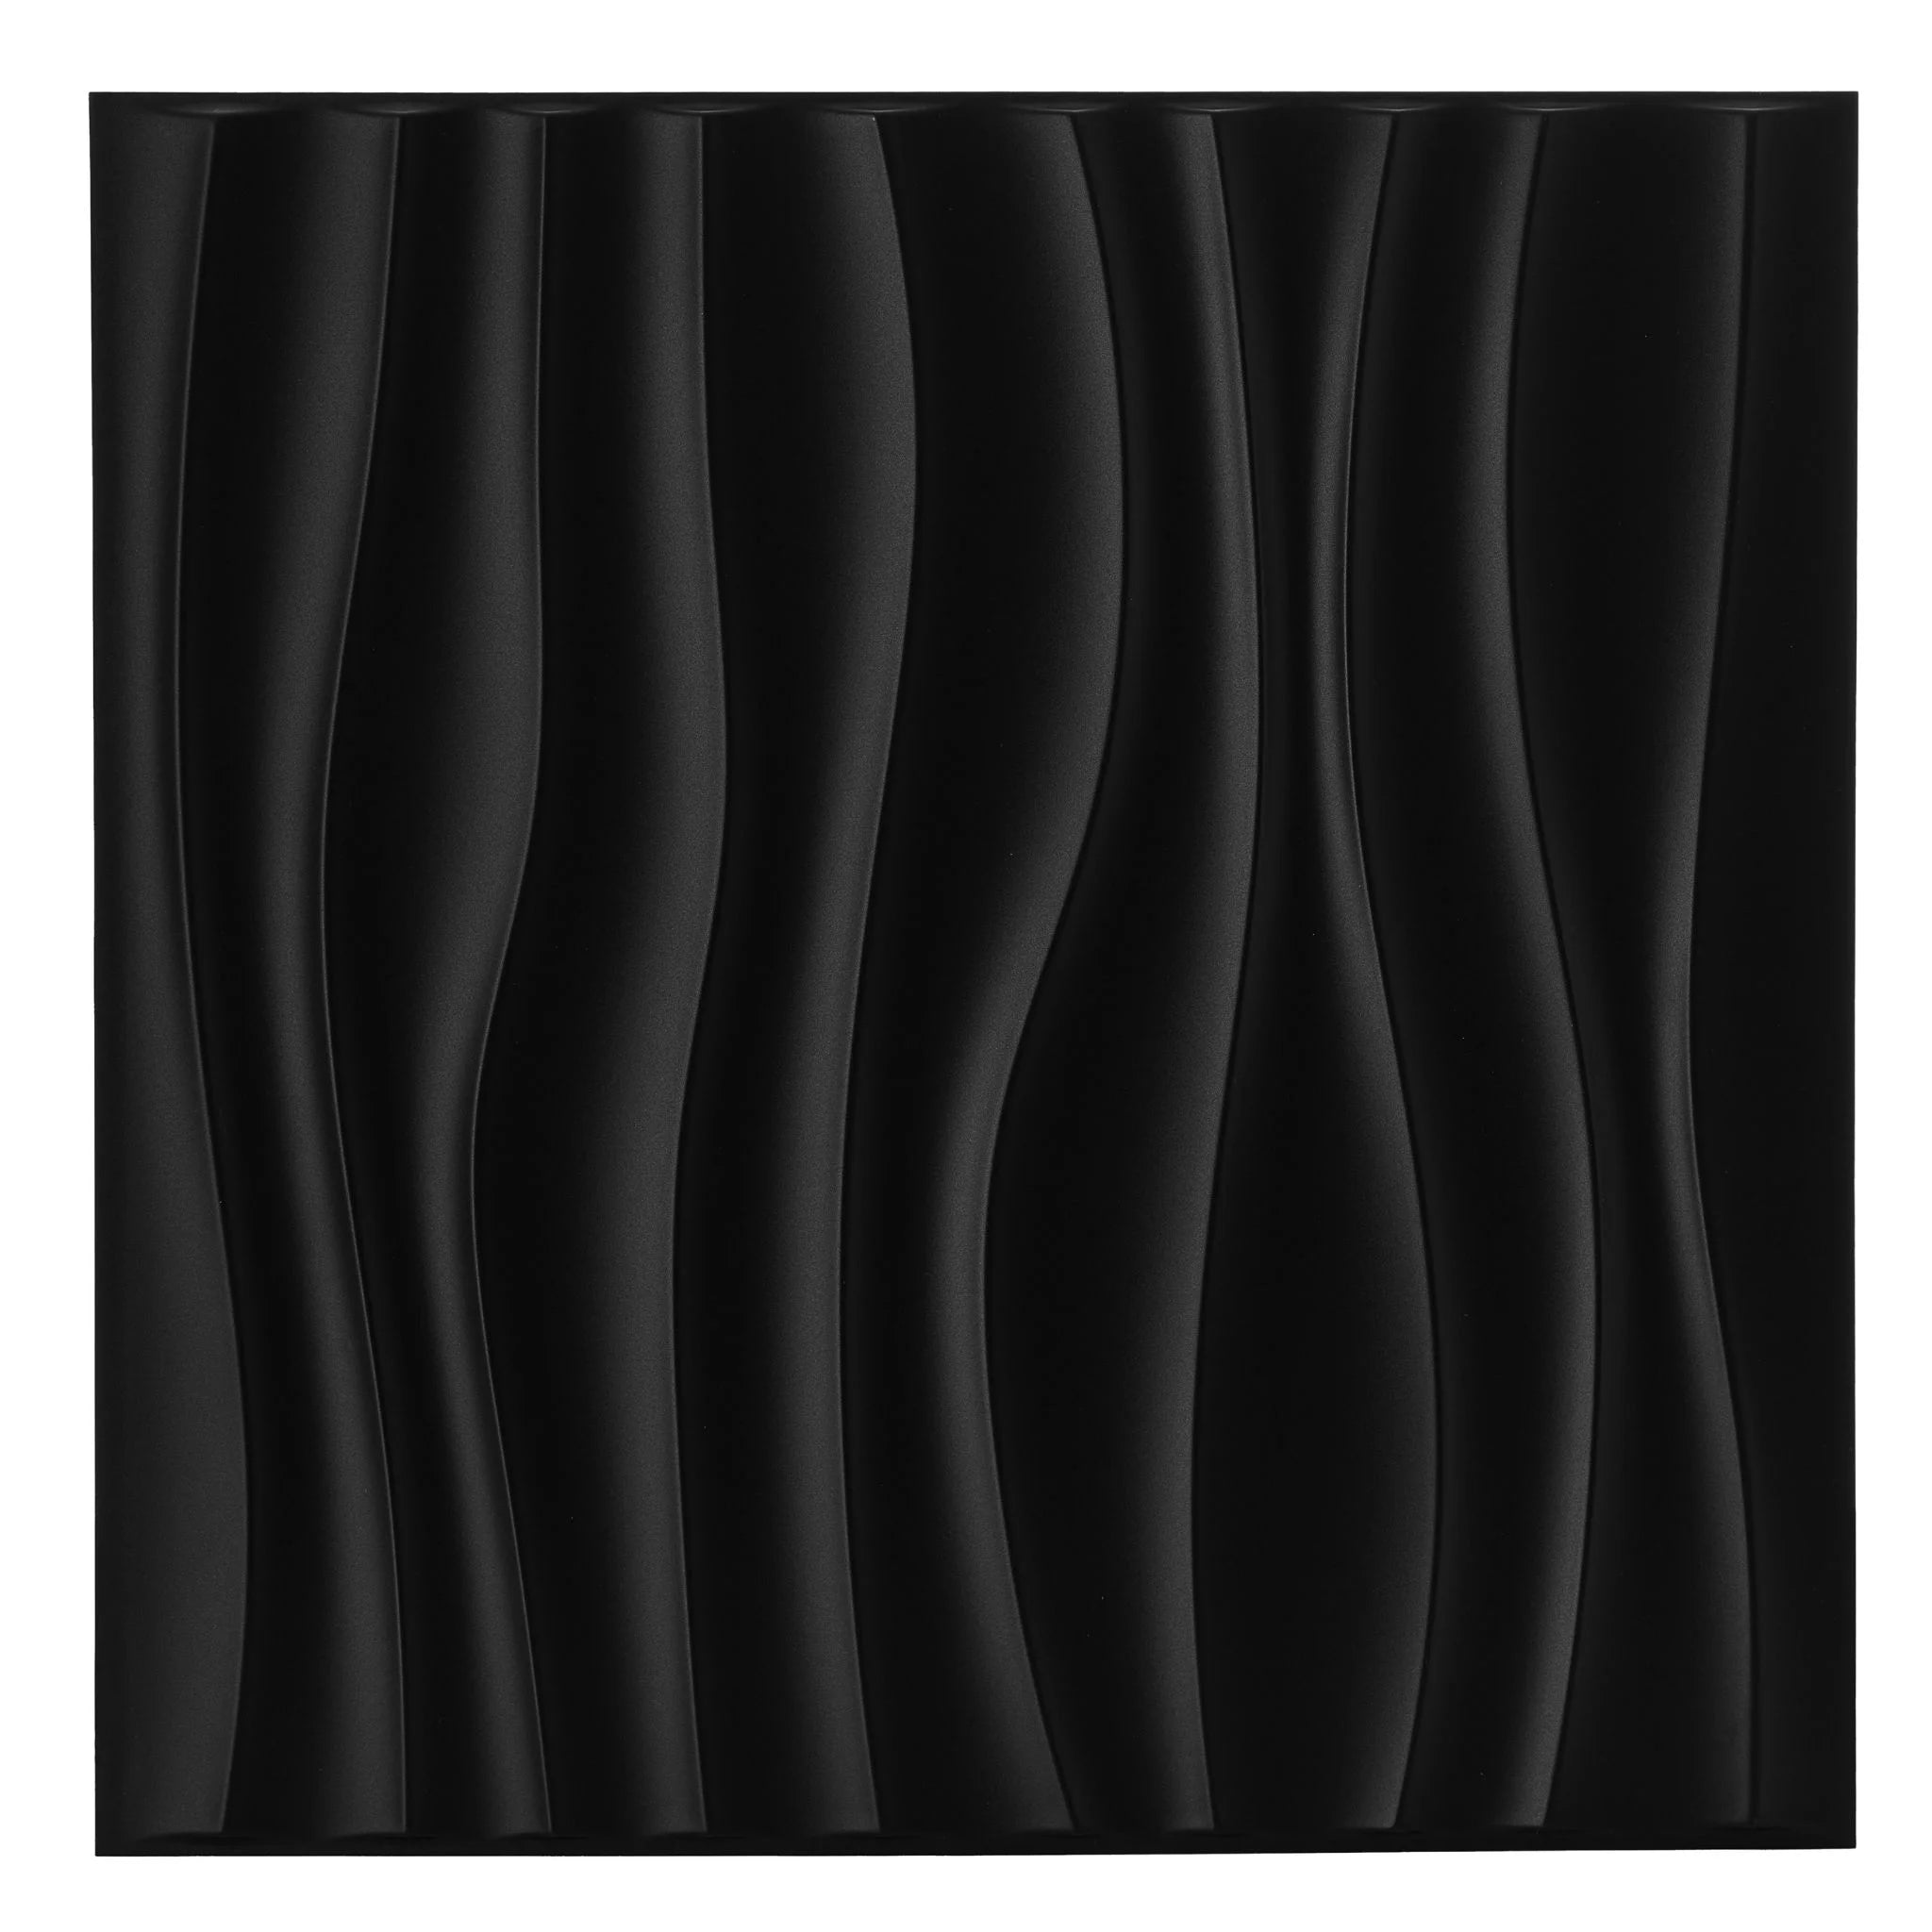 Detailed view of black PVC wall panel showcasing wavy design